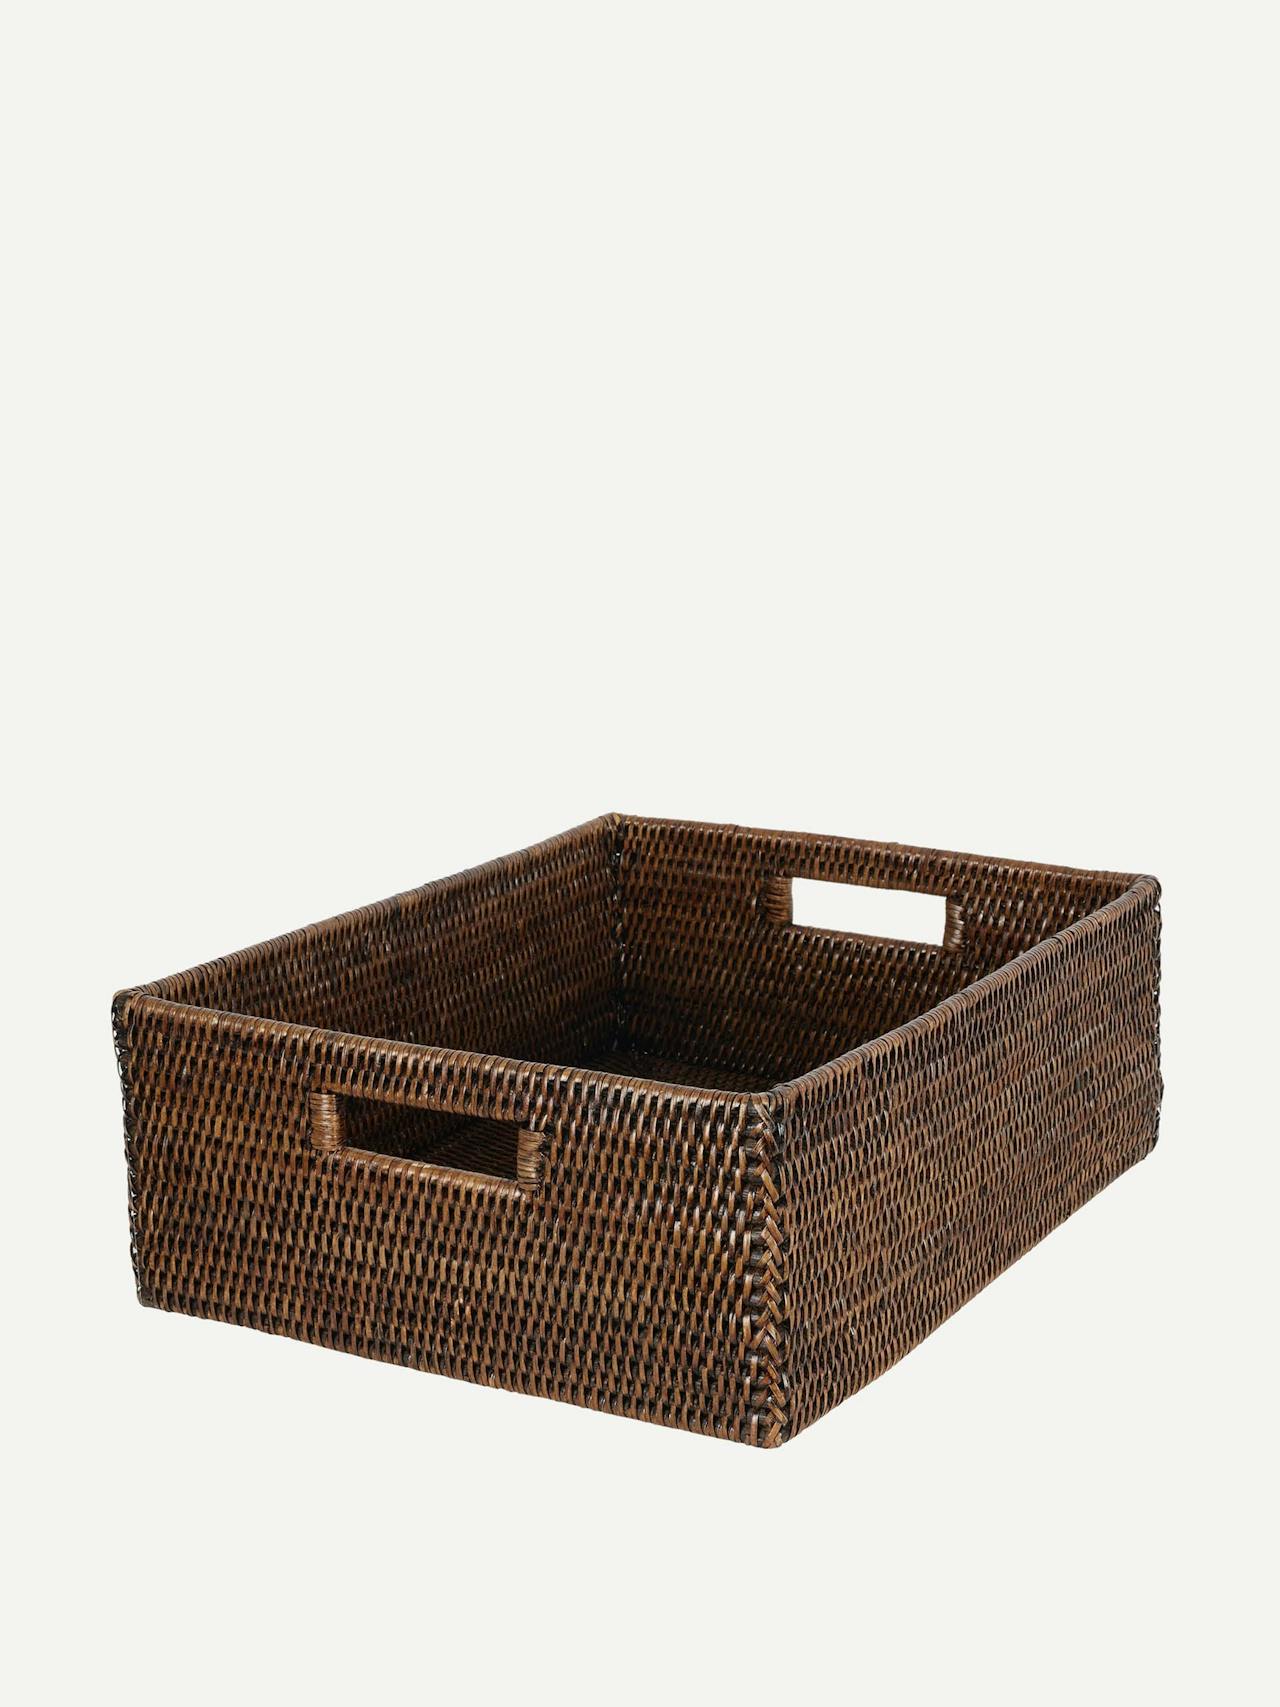 Rattan rectangular storage basket in brown